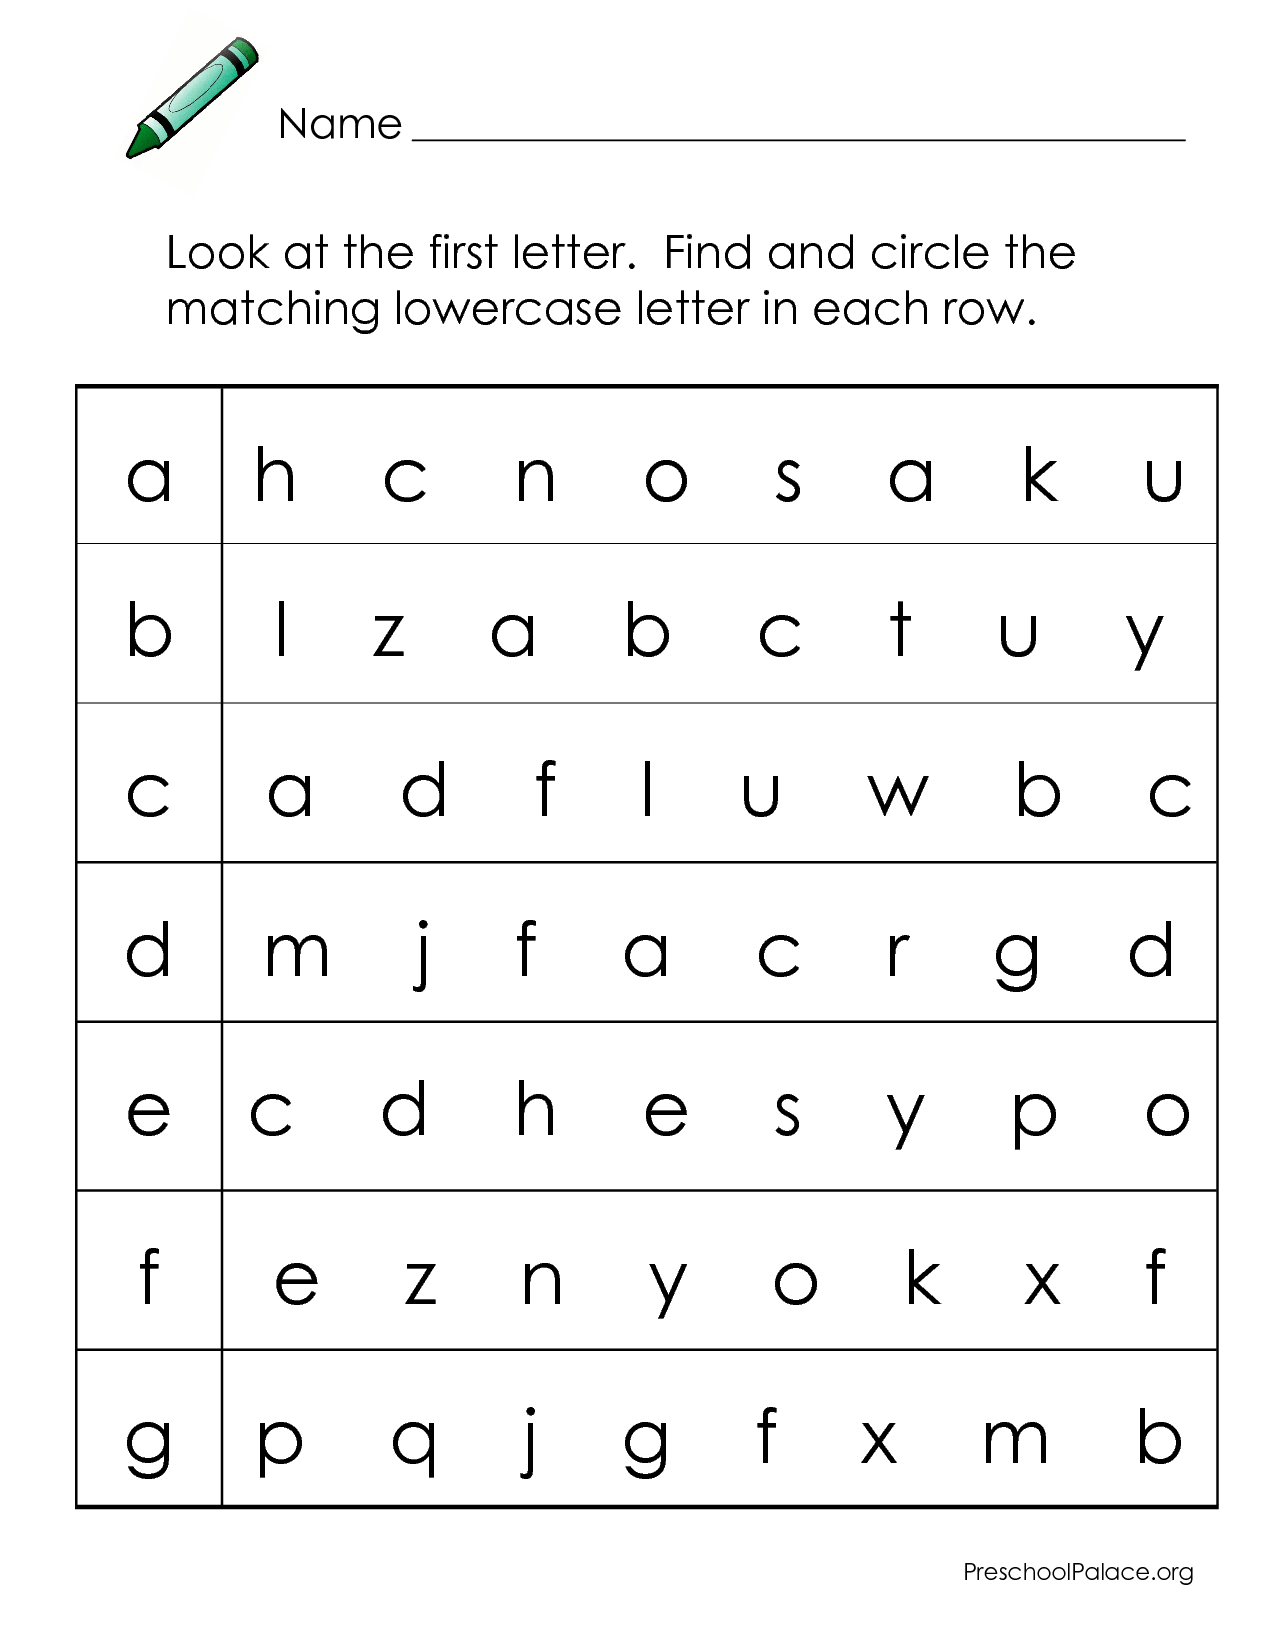 Alphabet Worksheets For Preschoolers | Abcs - Letter intended for Alphabet Worksheets Kinder